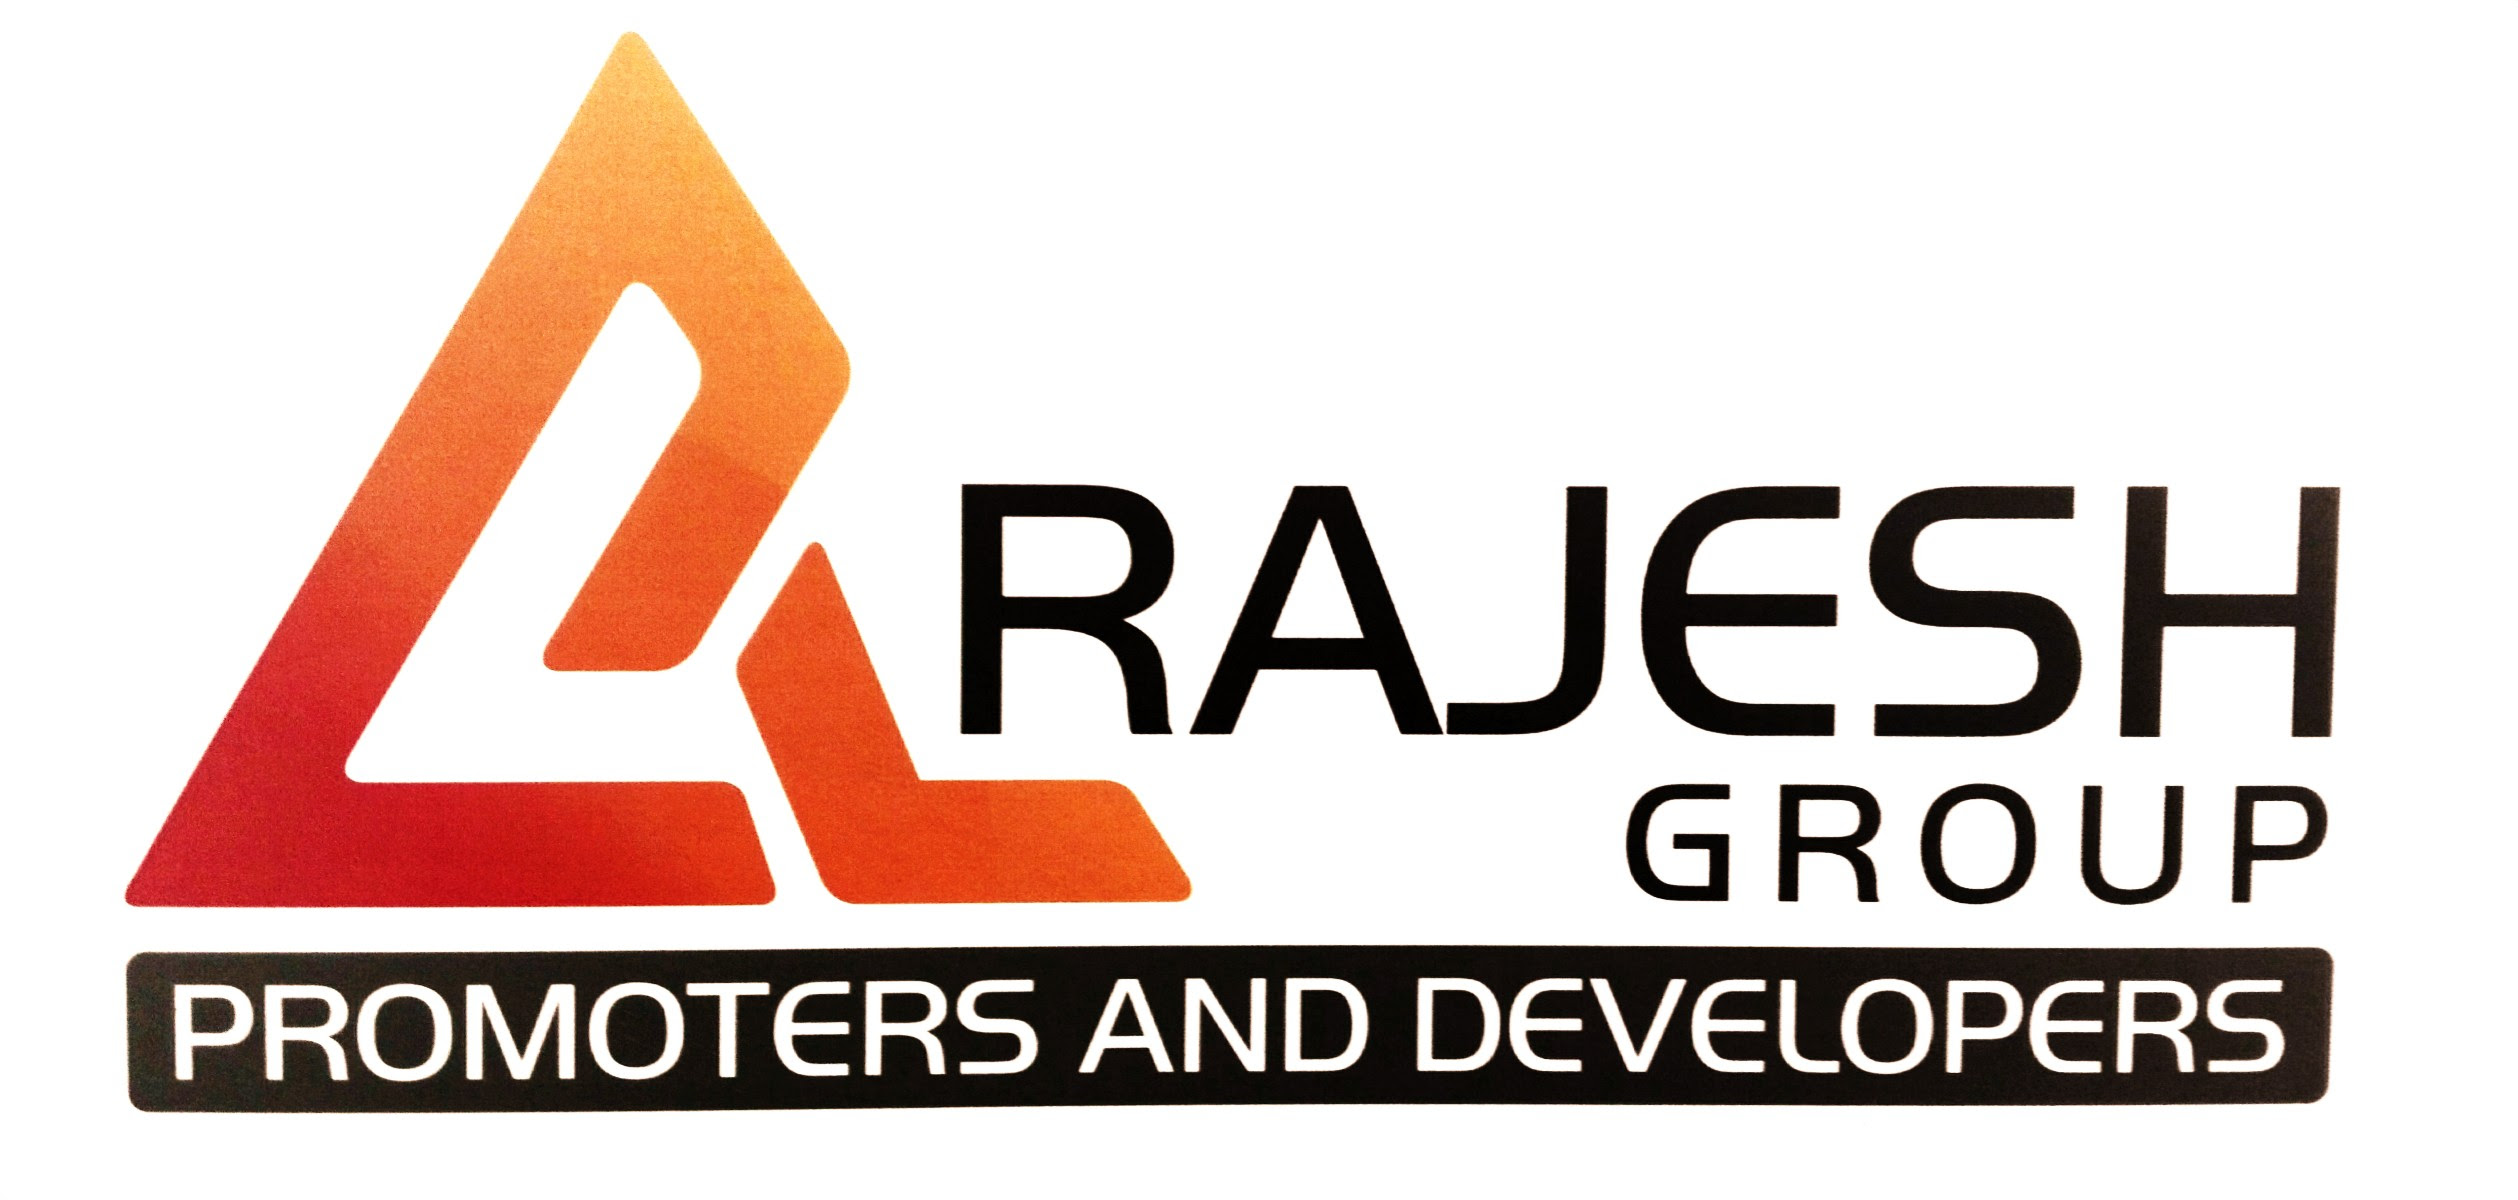 Rajesh Group